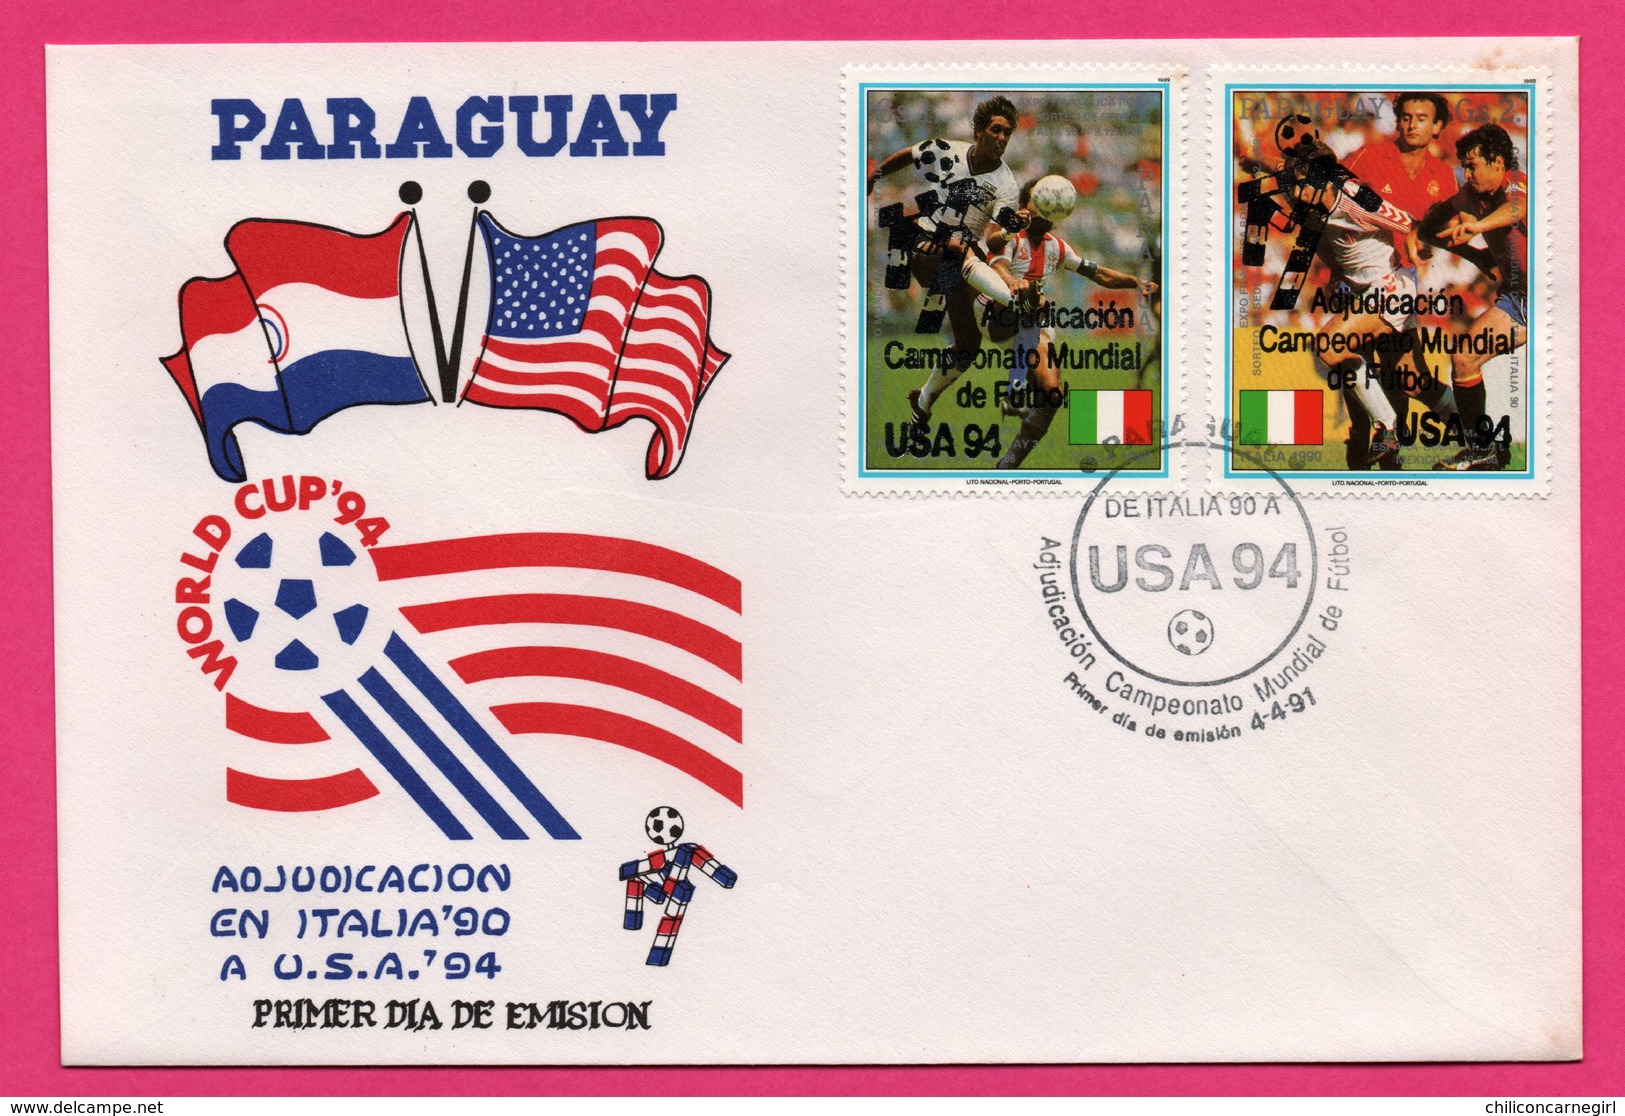 FDC - Football - World Cup USA 94 - Paraguay - De Italia 90 A - Adjudicacion Campeonato Mundial De Futbol - 1994 - 1994 – Vereinigte Staaten